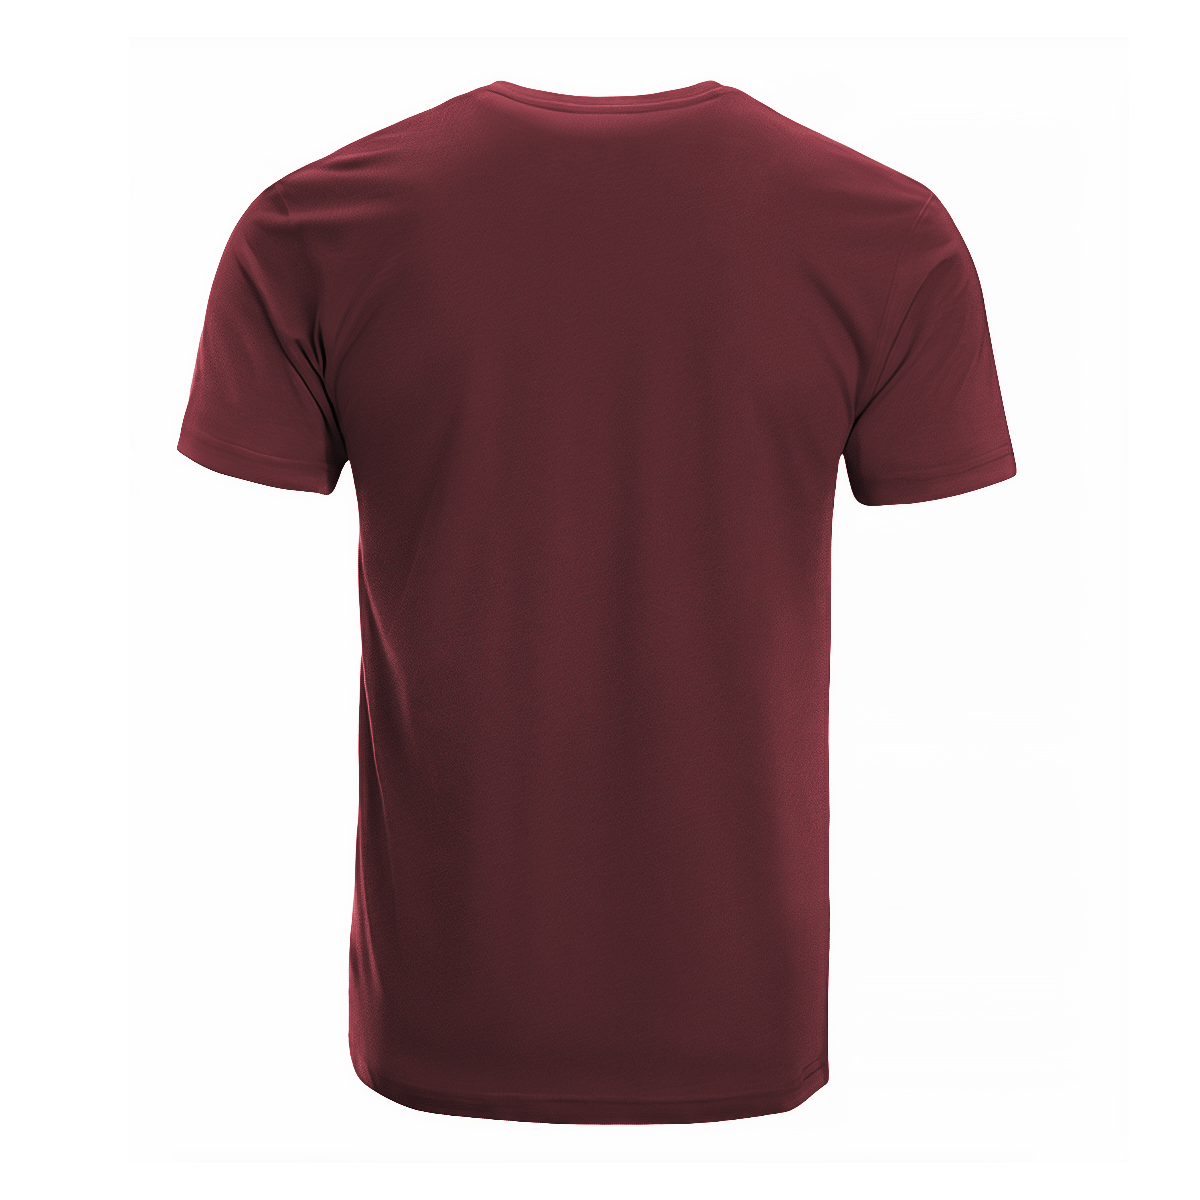 Harkness Tartan Crest T-shirt - I'm not yelling style